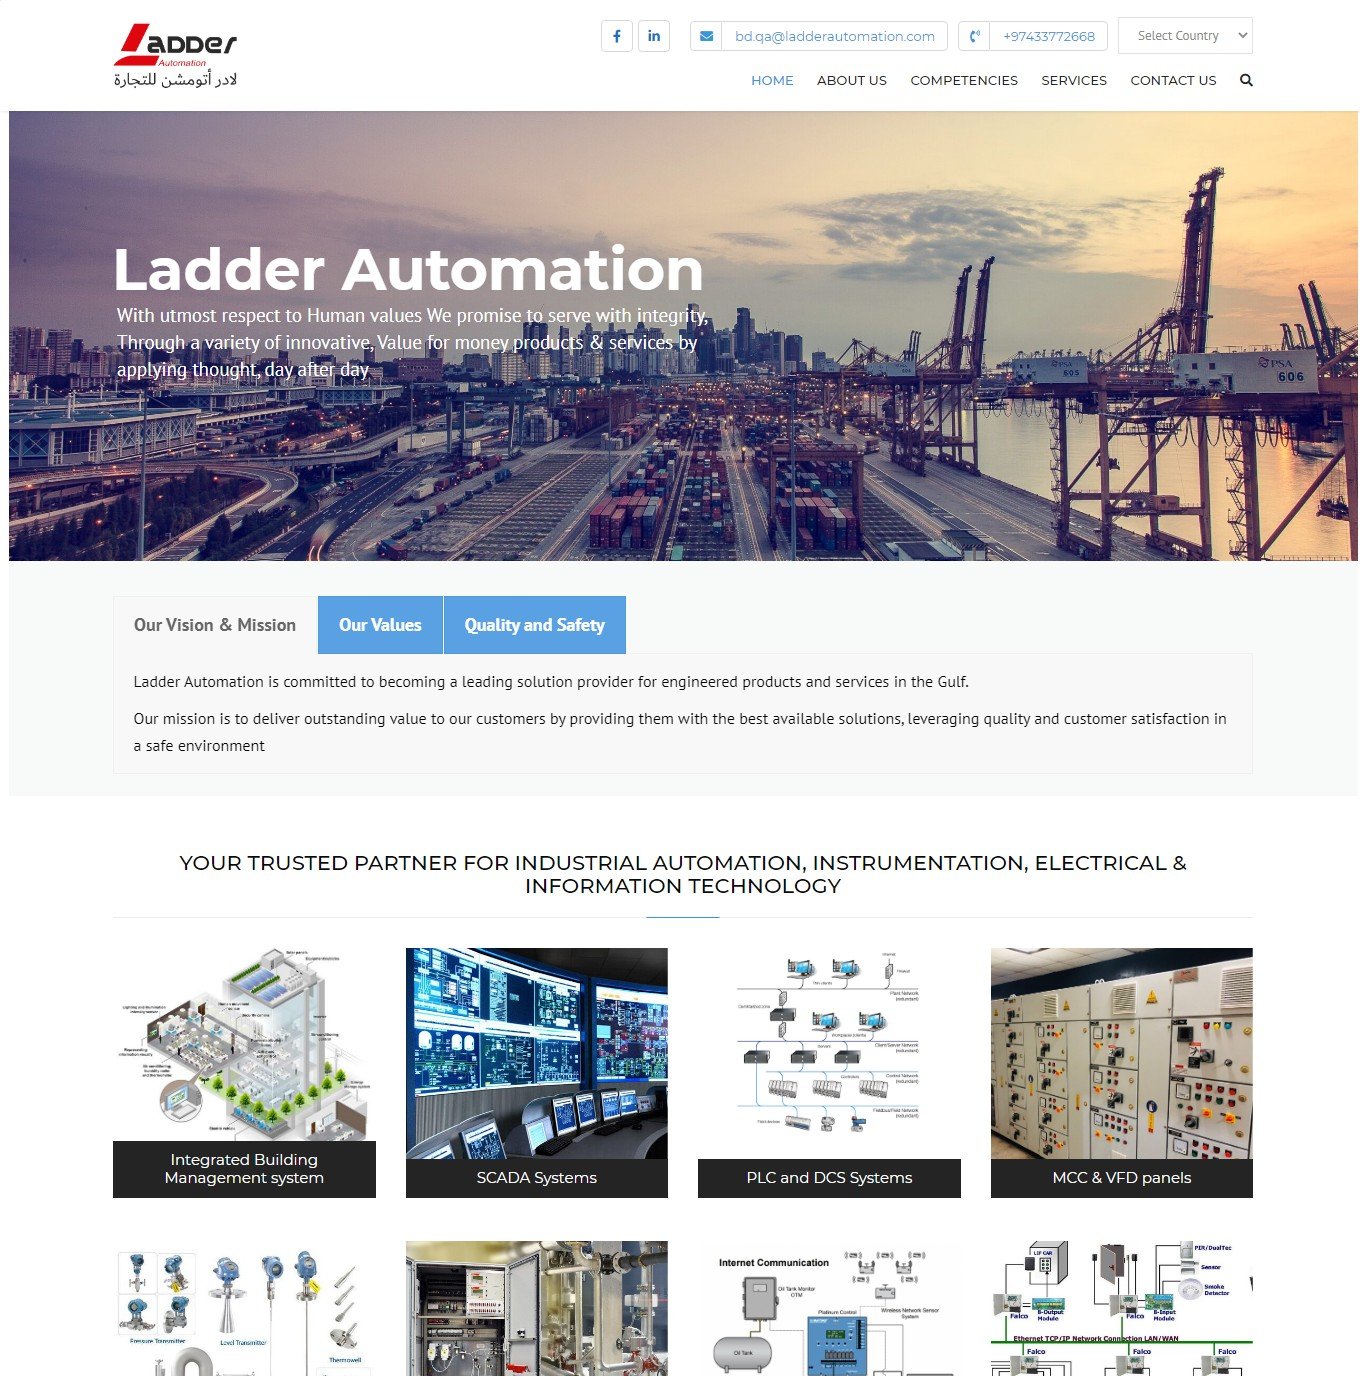 Ladder Automation